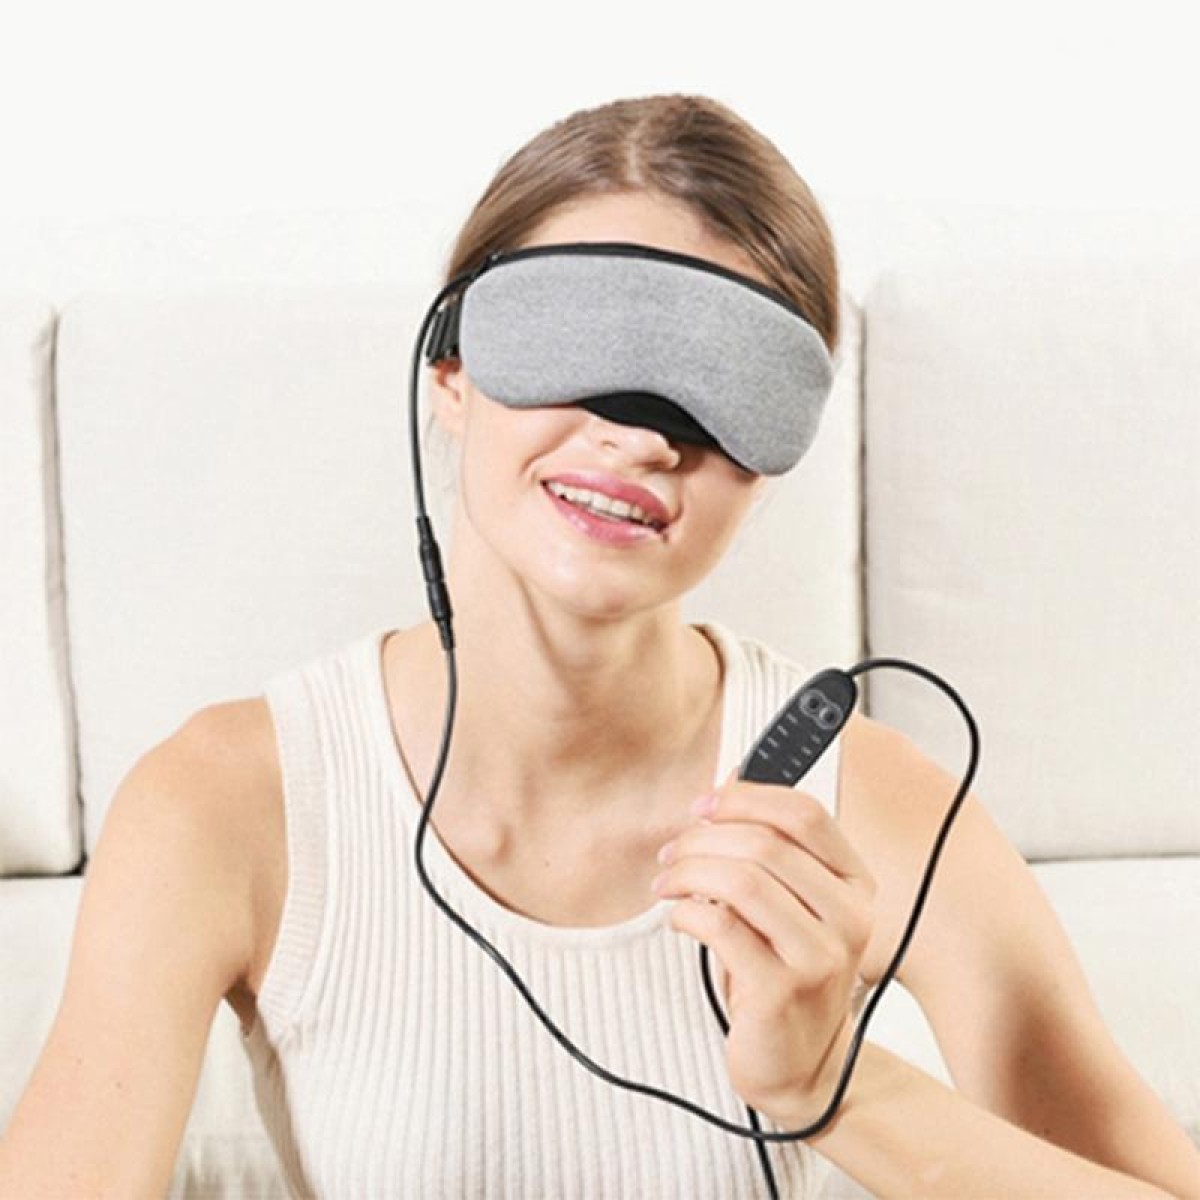 USB Charging Heating Steam Sleep Eye Mask (Grey)